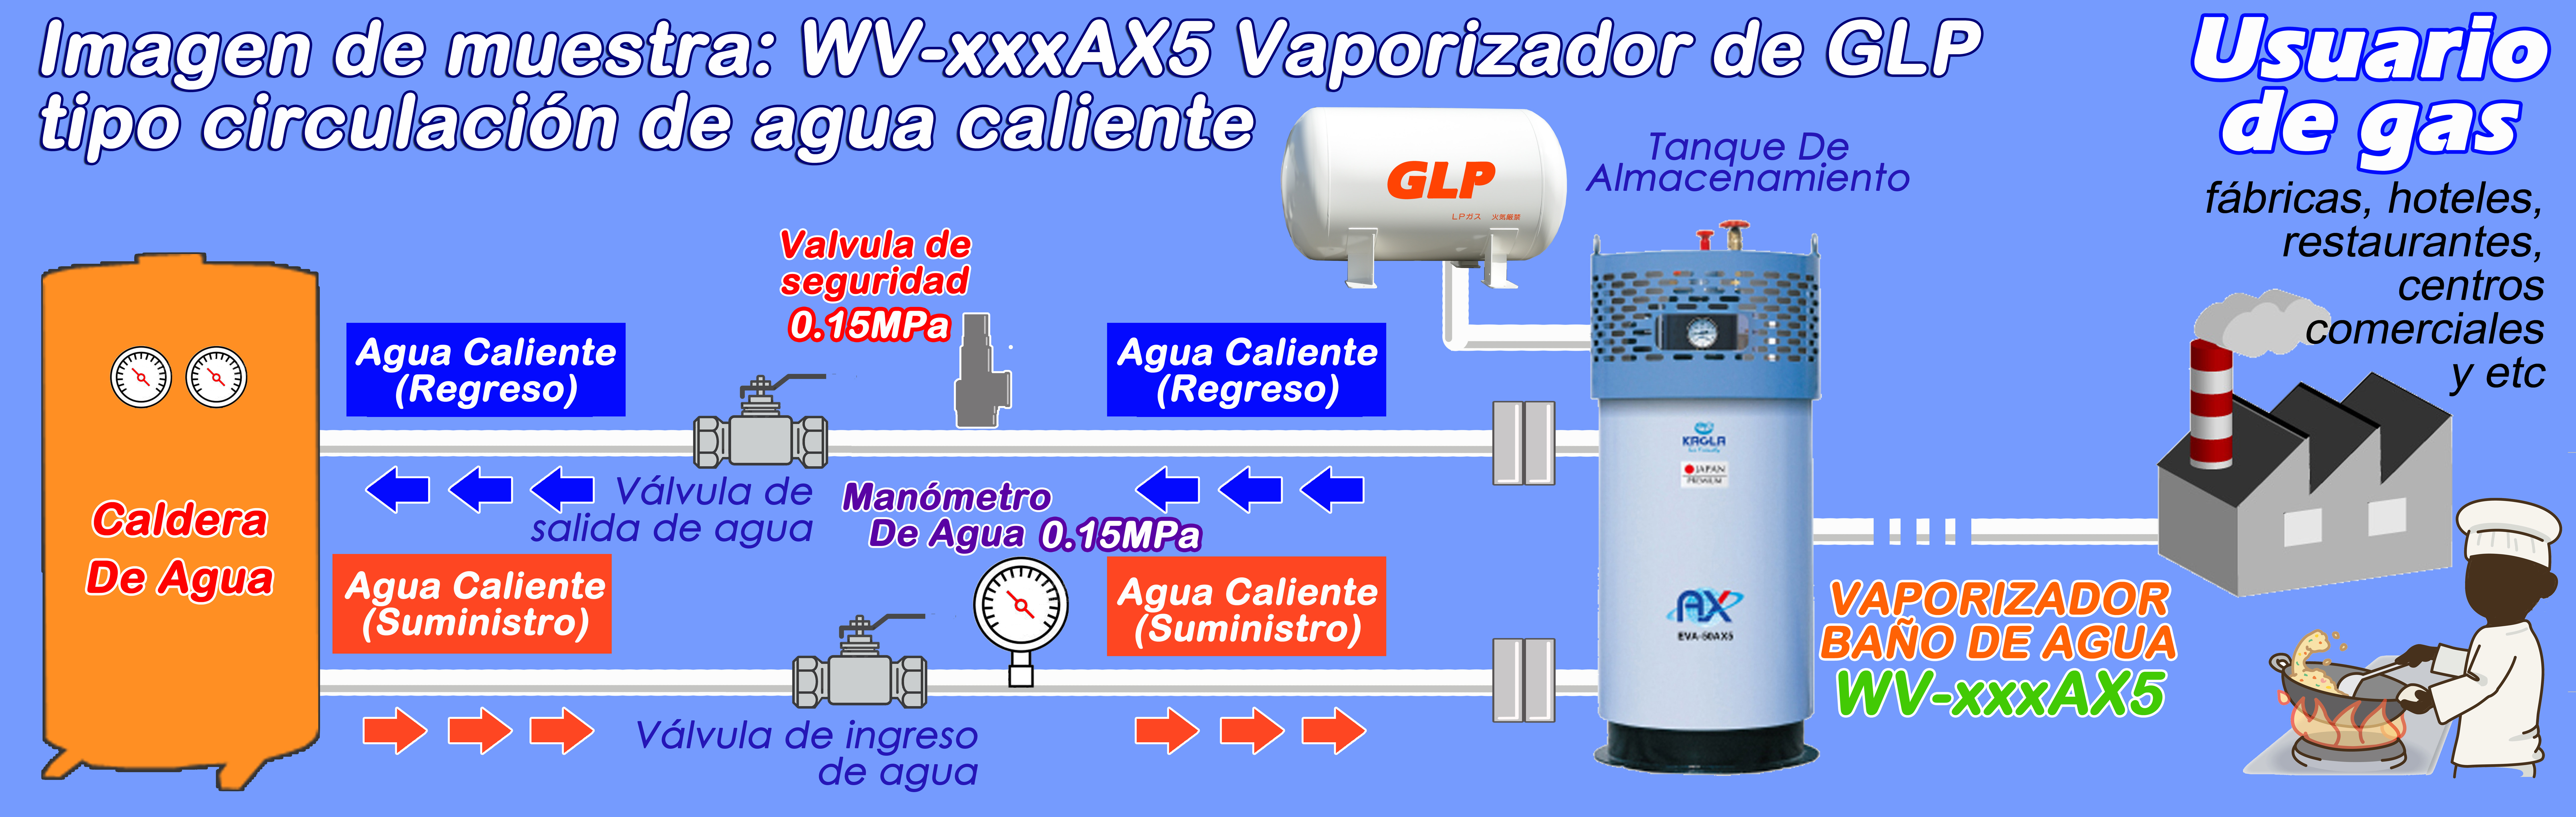 Imagen de instalación del vaporizador WV-AX5 con caldera de agua como fuente de calor